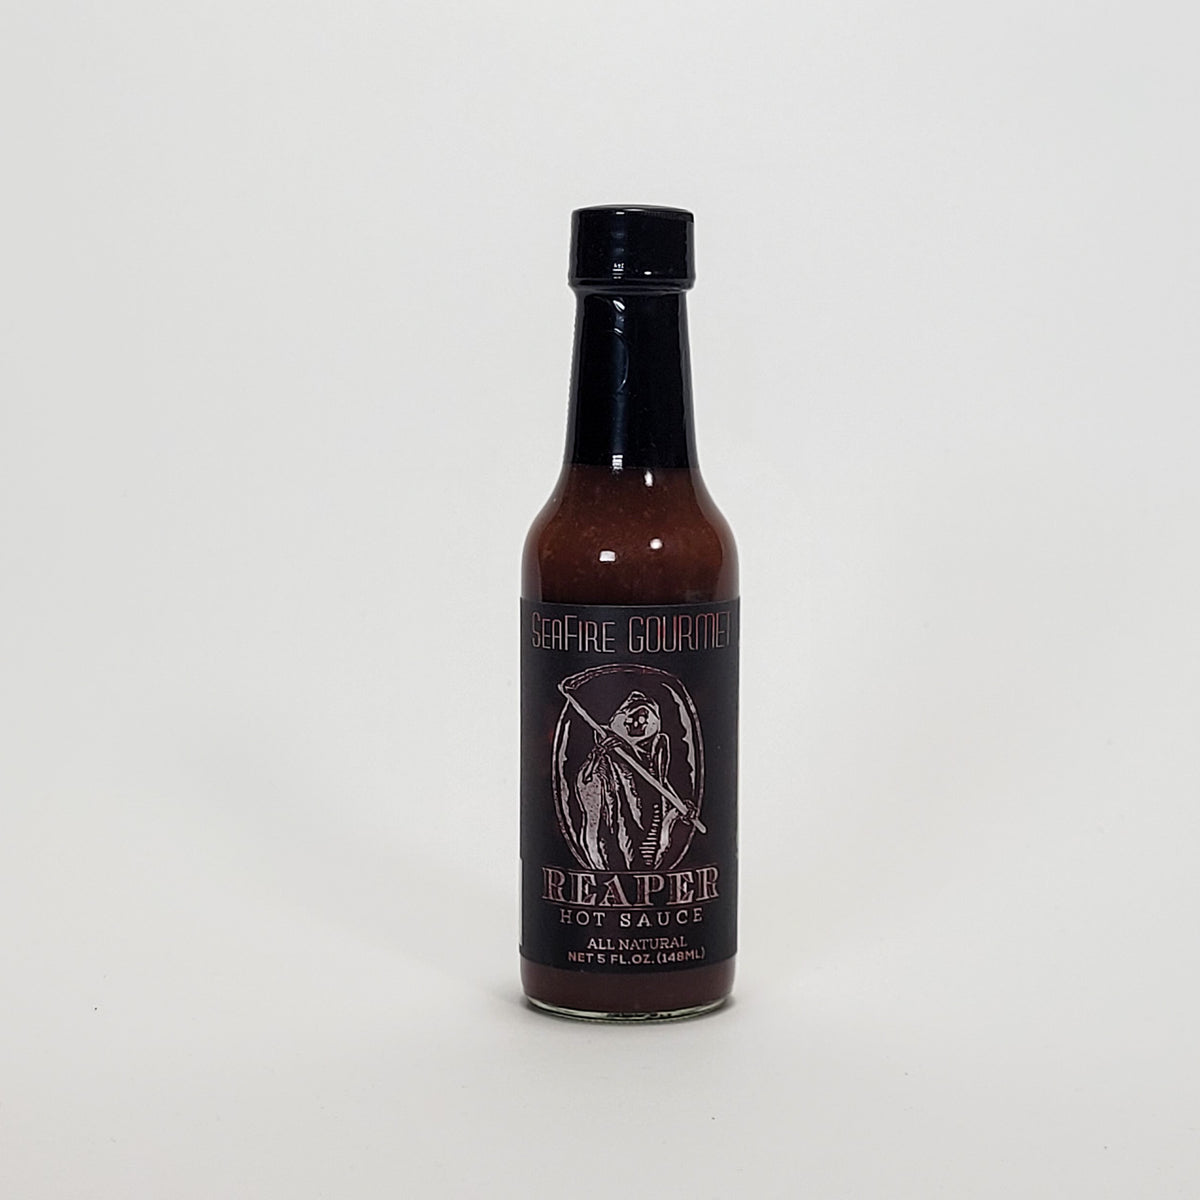 Seafire Gourmet Reaper Sauce hot sauce